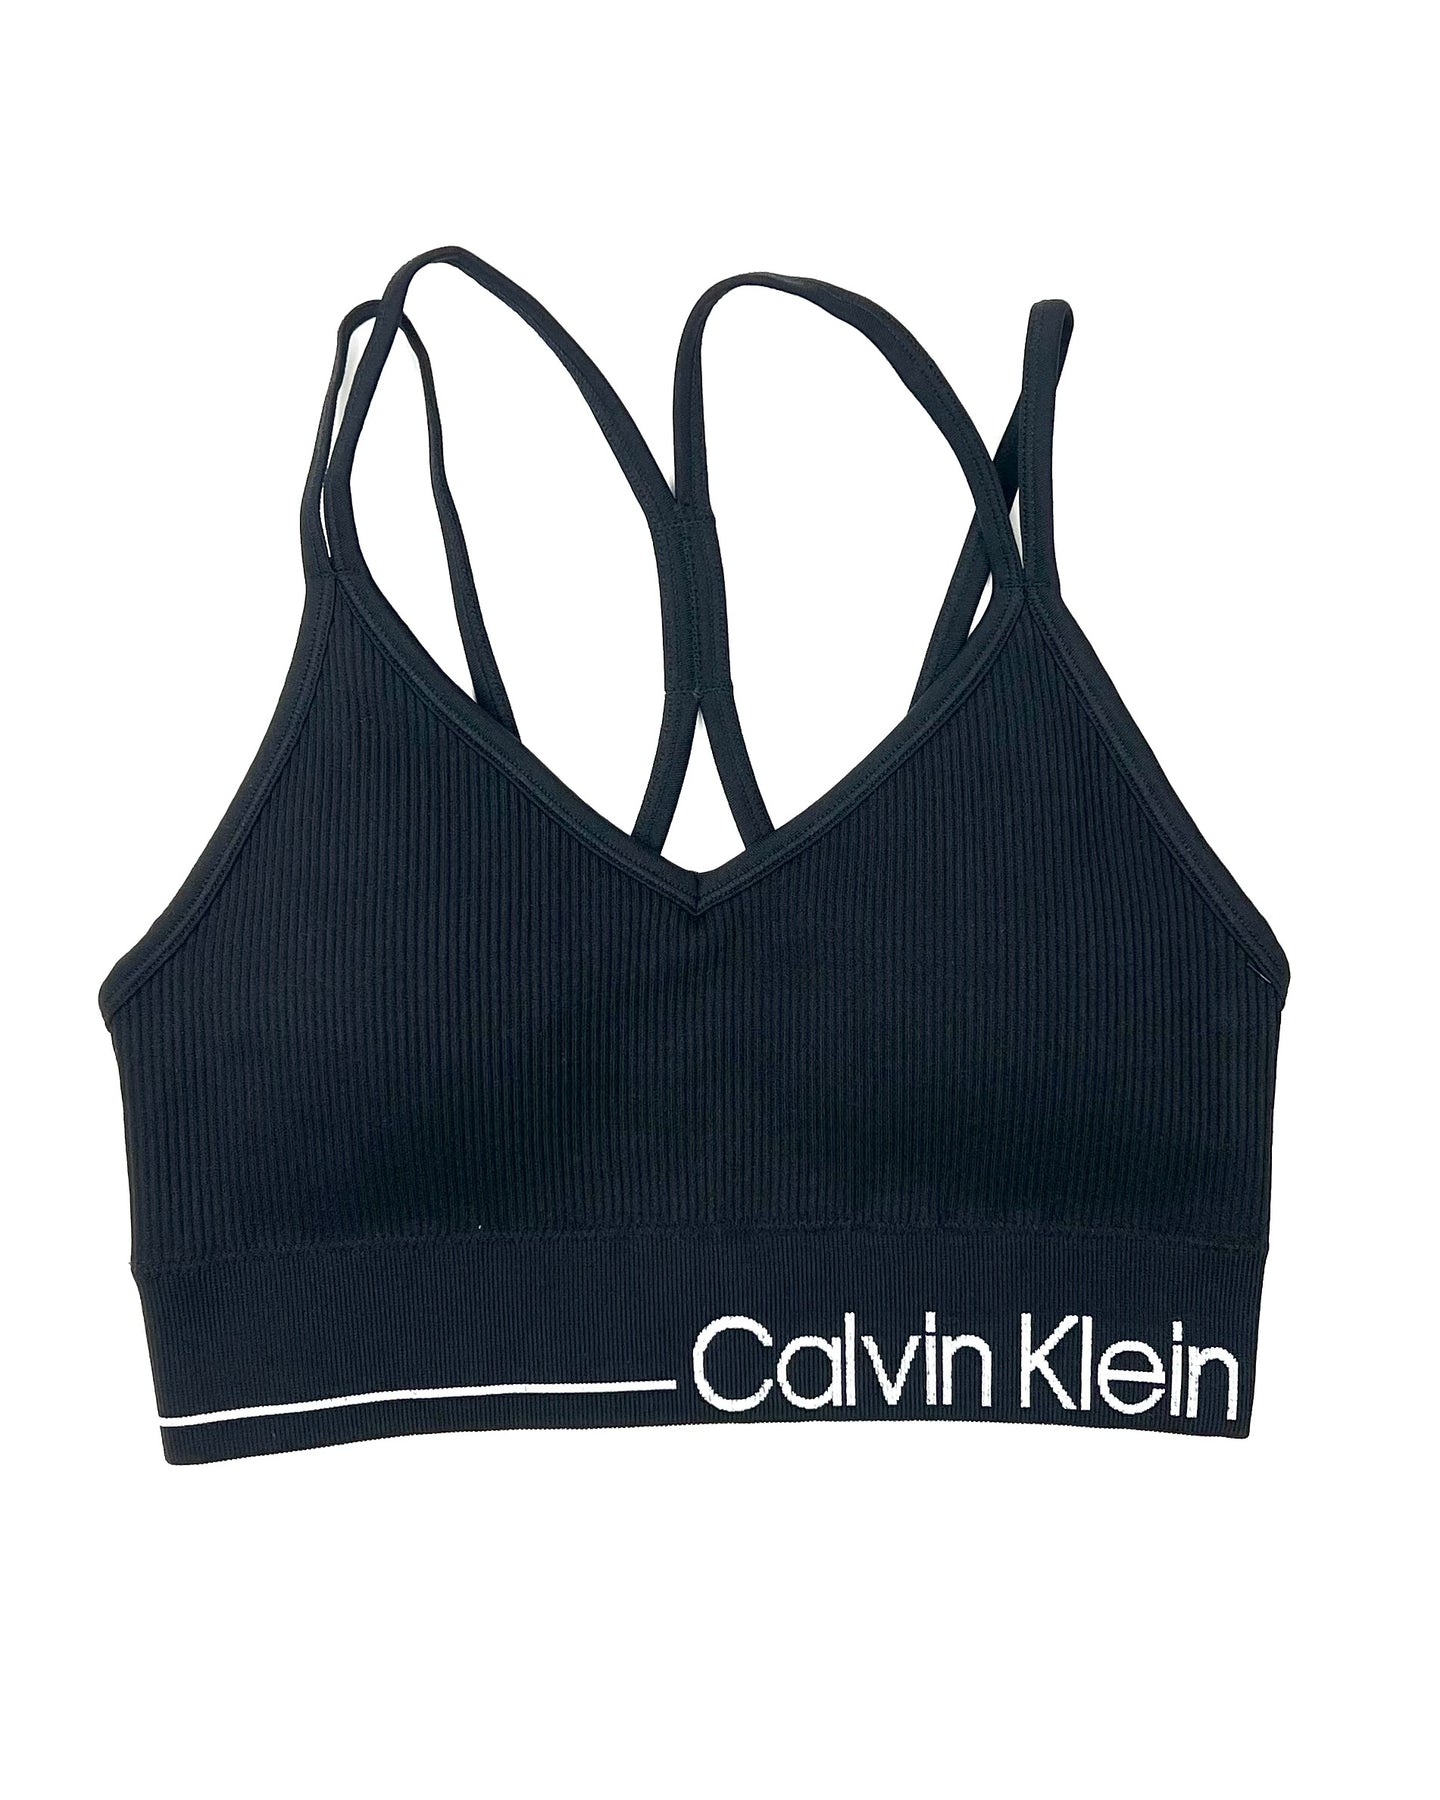 Calvin Klein Black Ribbed V-Neck Sports Bra - Small